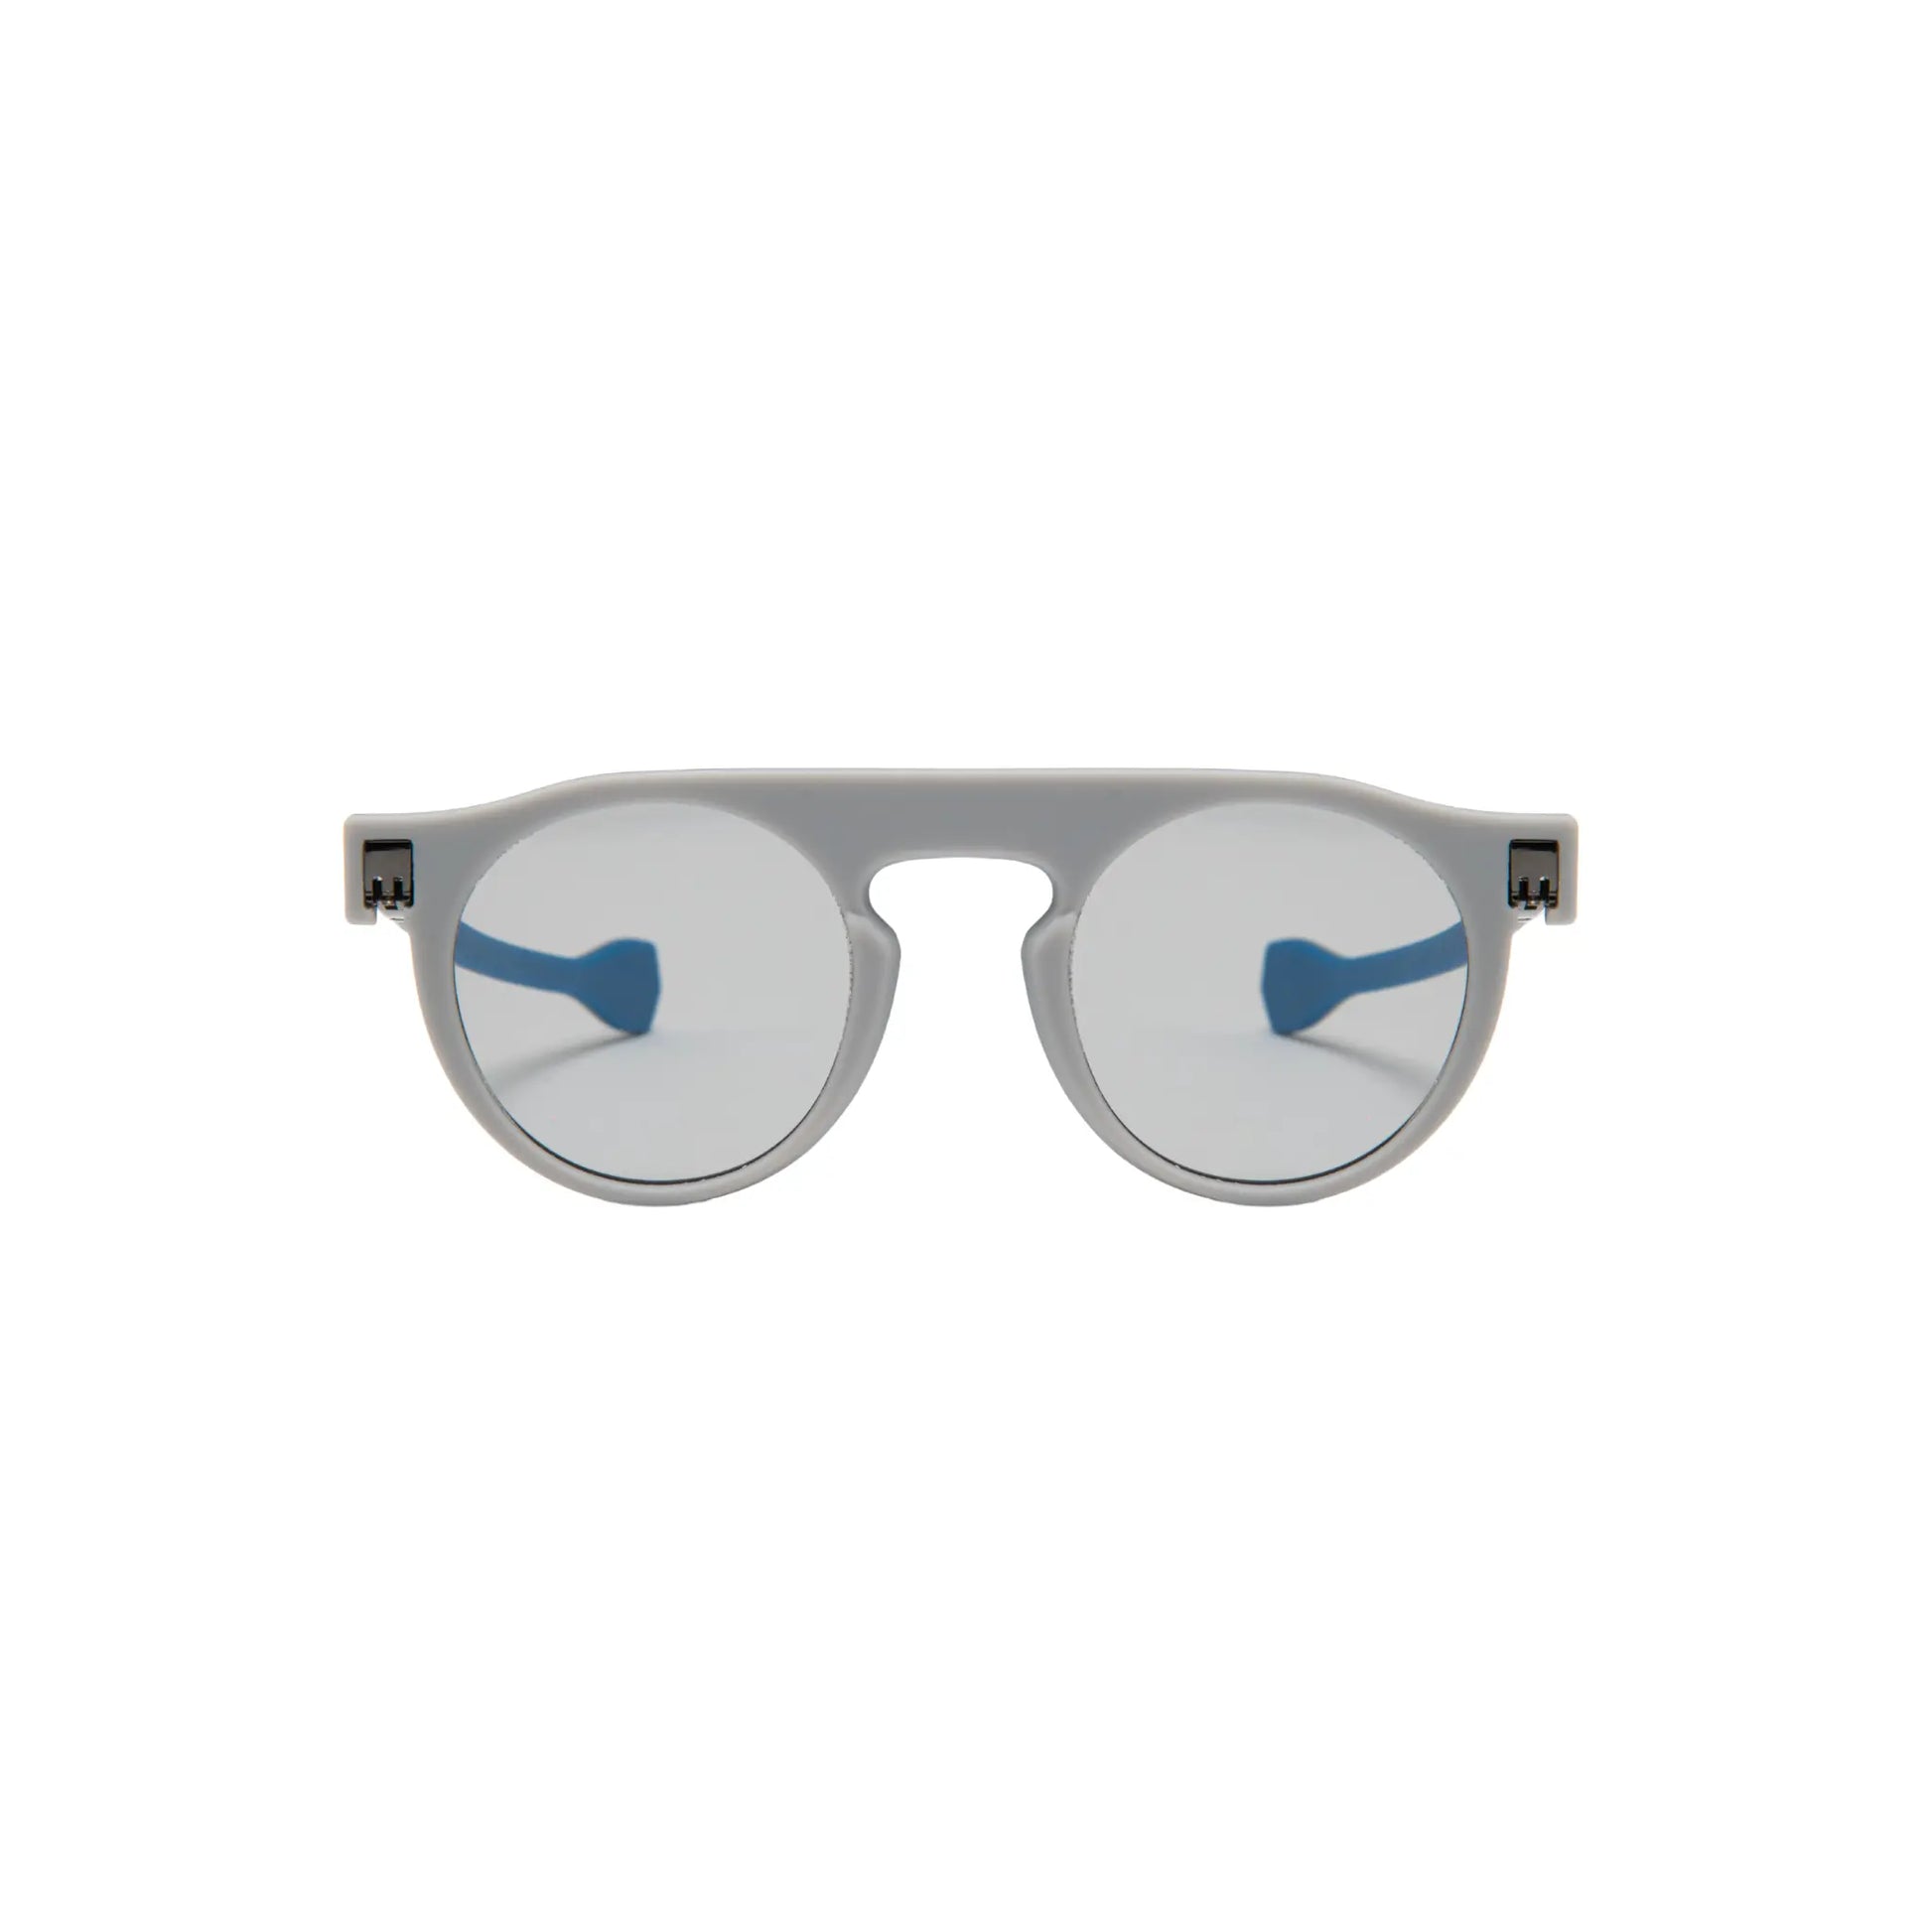 Reverso sunglasses black/grey & blue reversible & ultra light front view 1